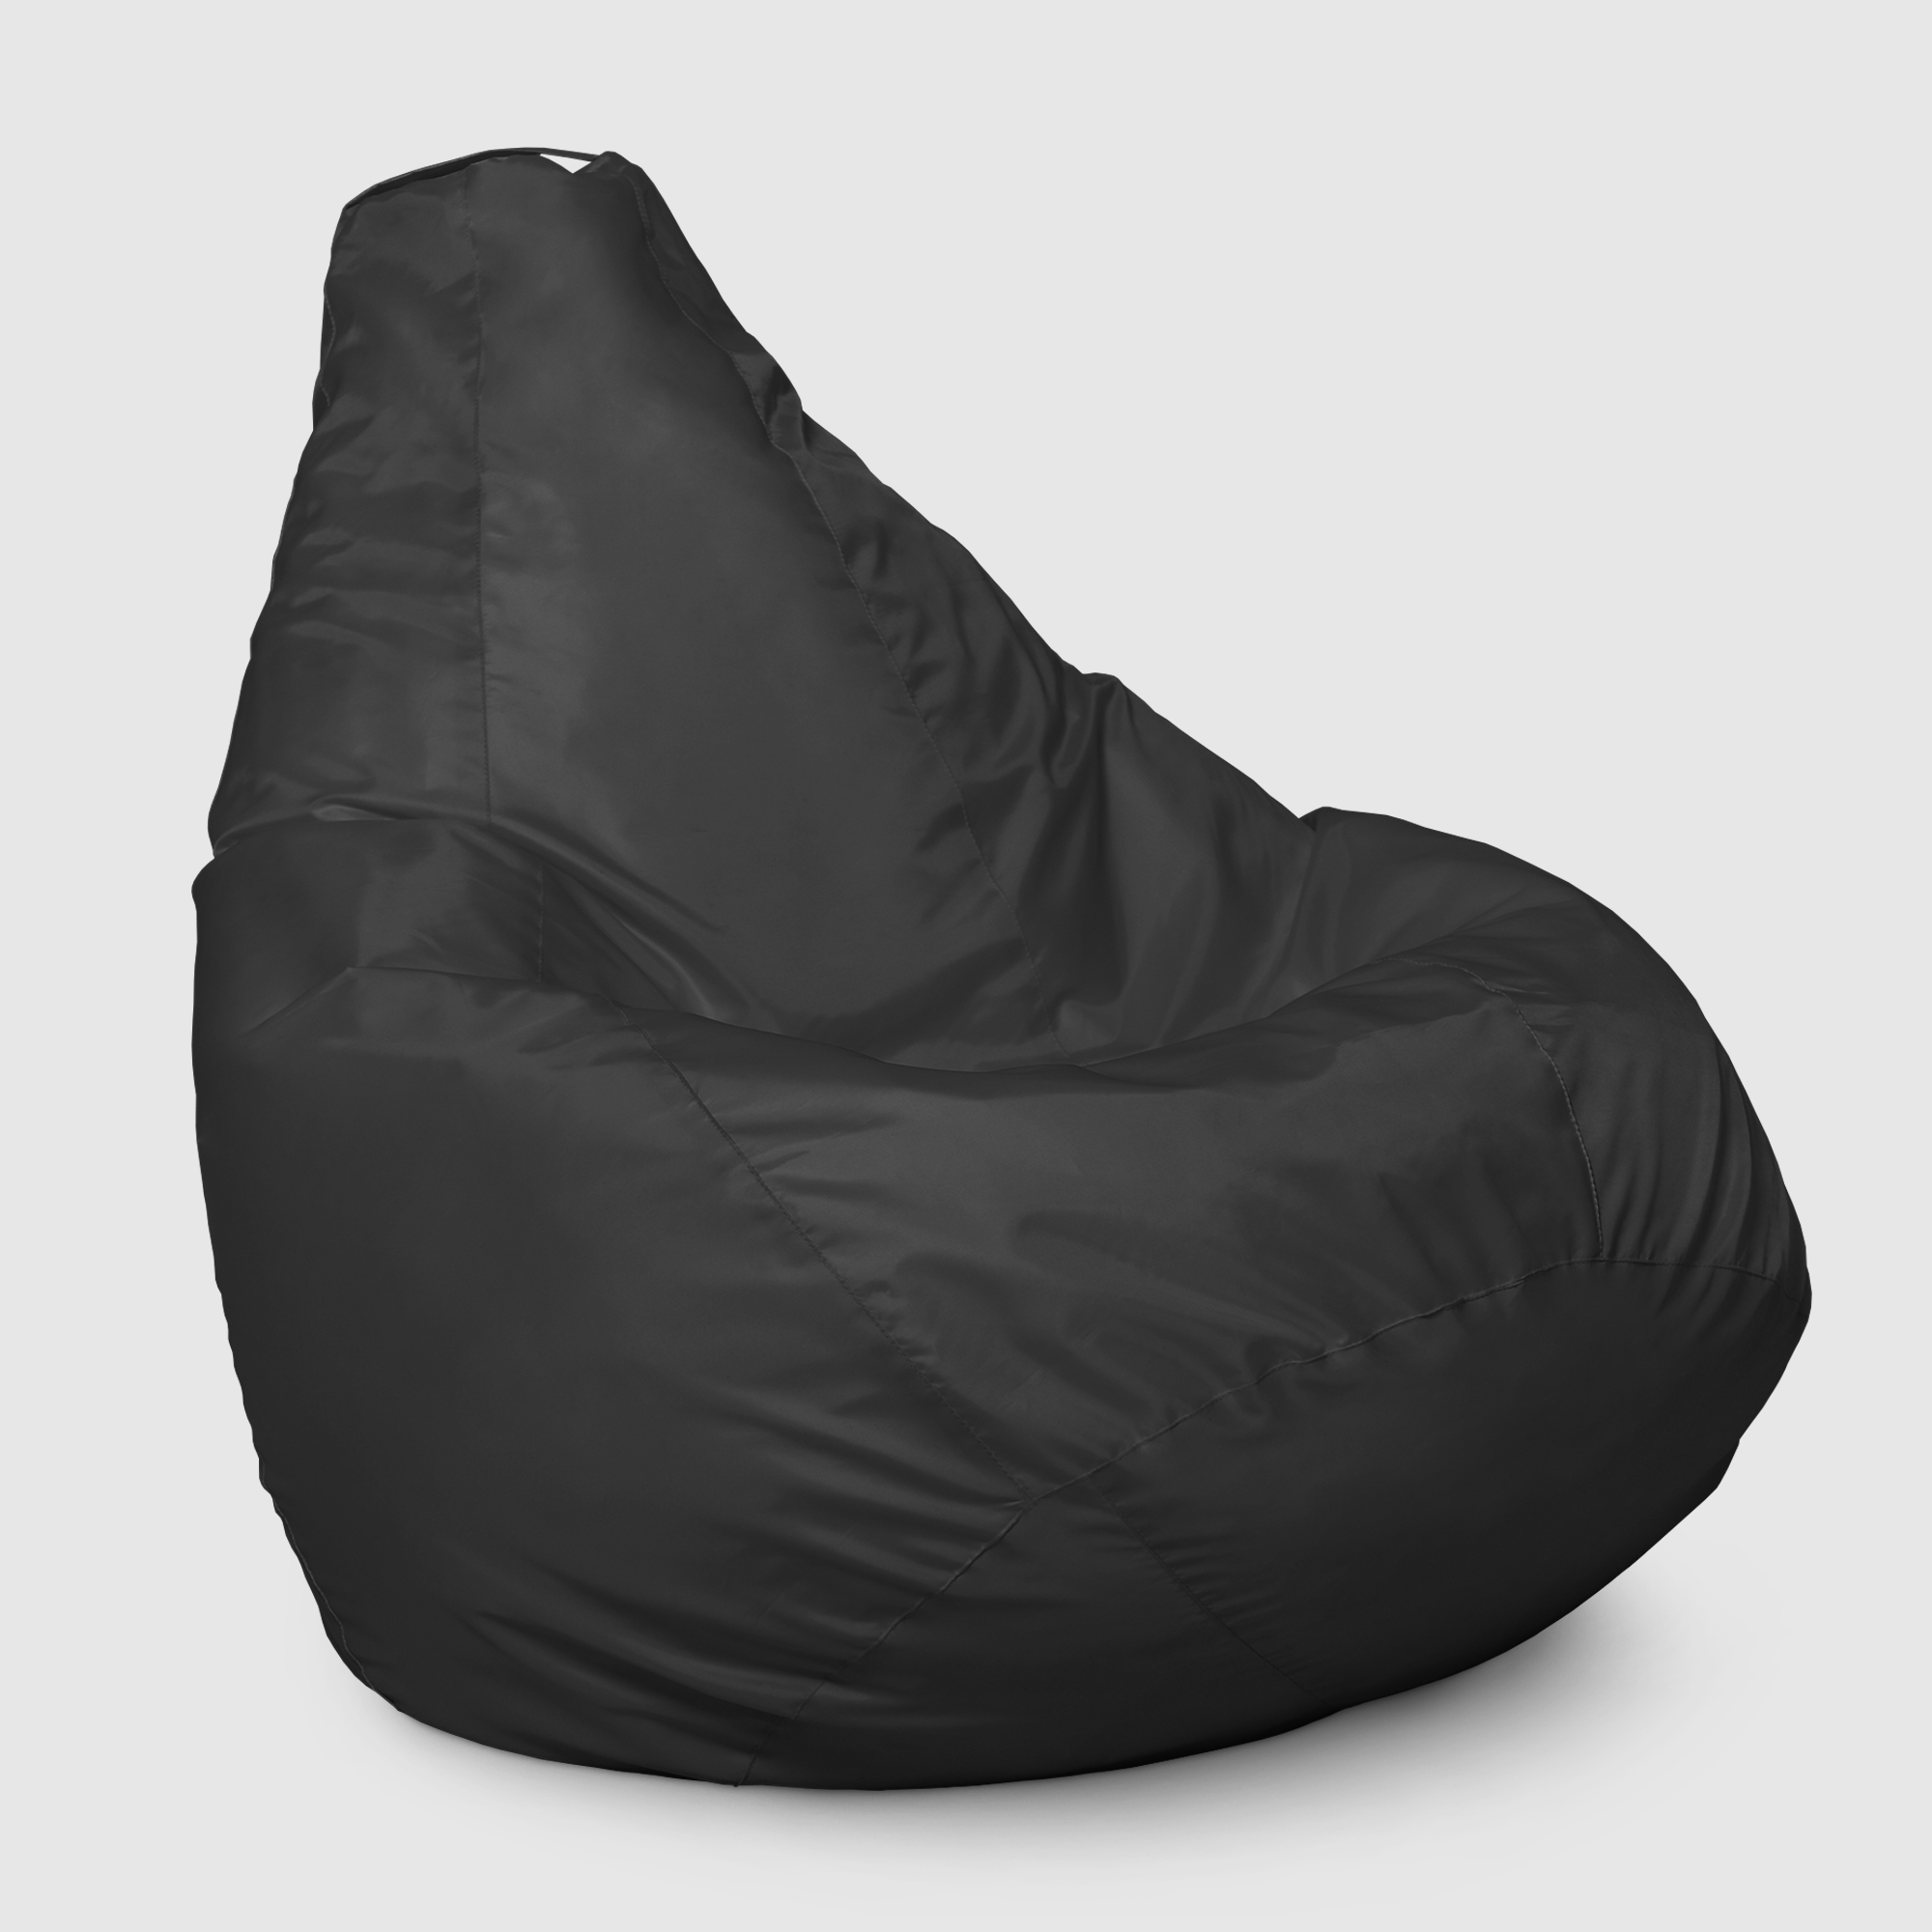 Кресло мешок Dreambag Меган xl черное 85х85х125 см кресло мешок dreambag меган xl оранжевое 85х85х125см